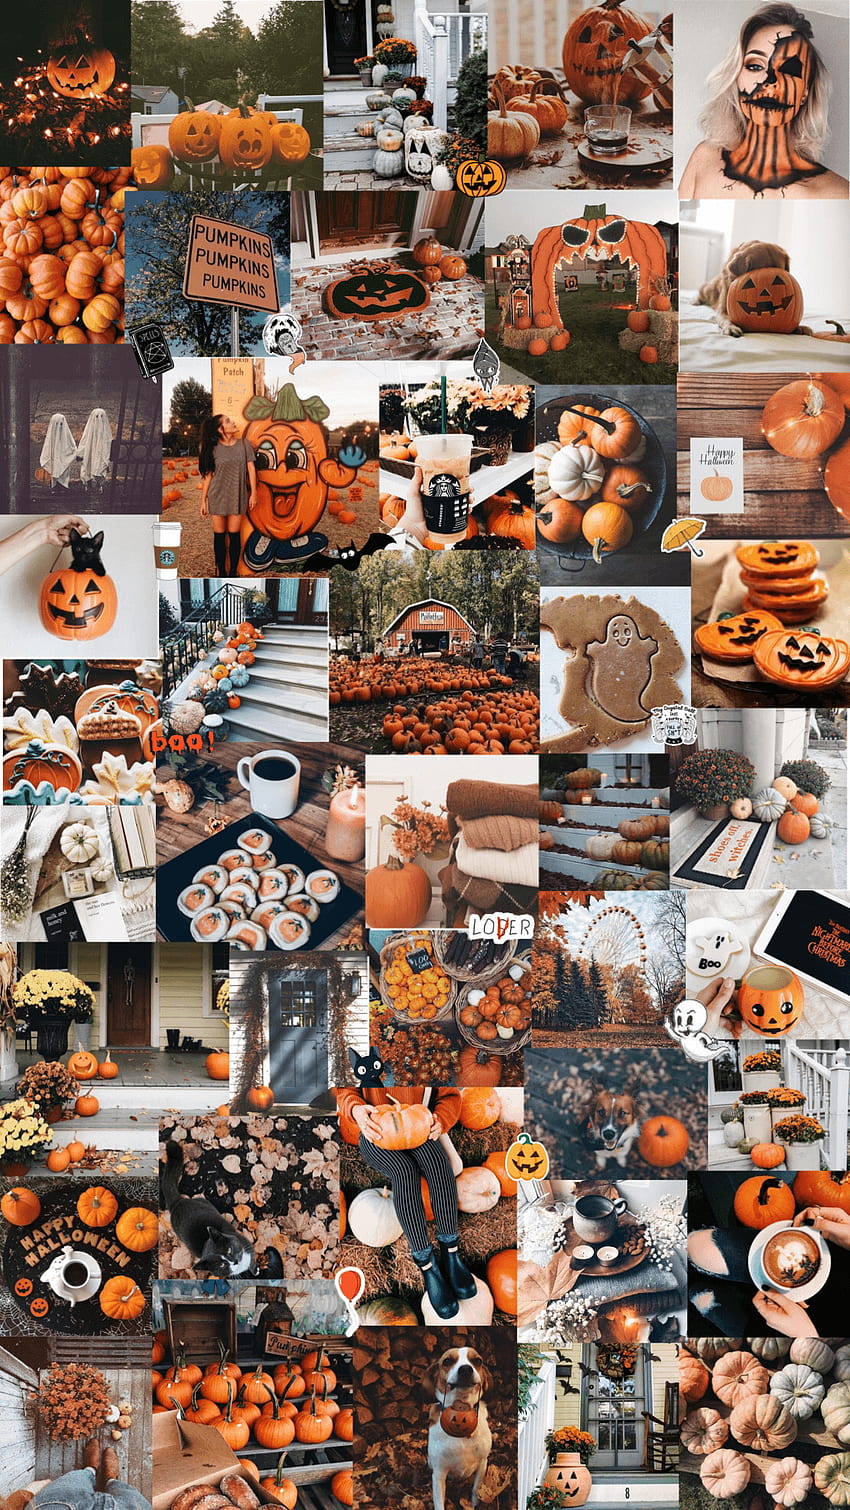 Cute Disney Halloween iPhone Wallpapers Free Download